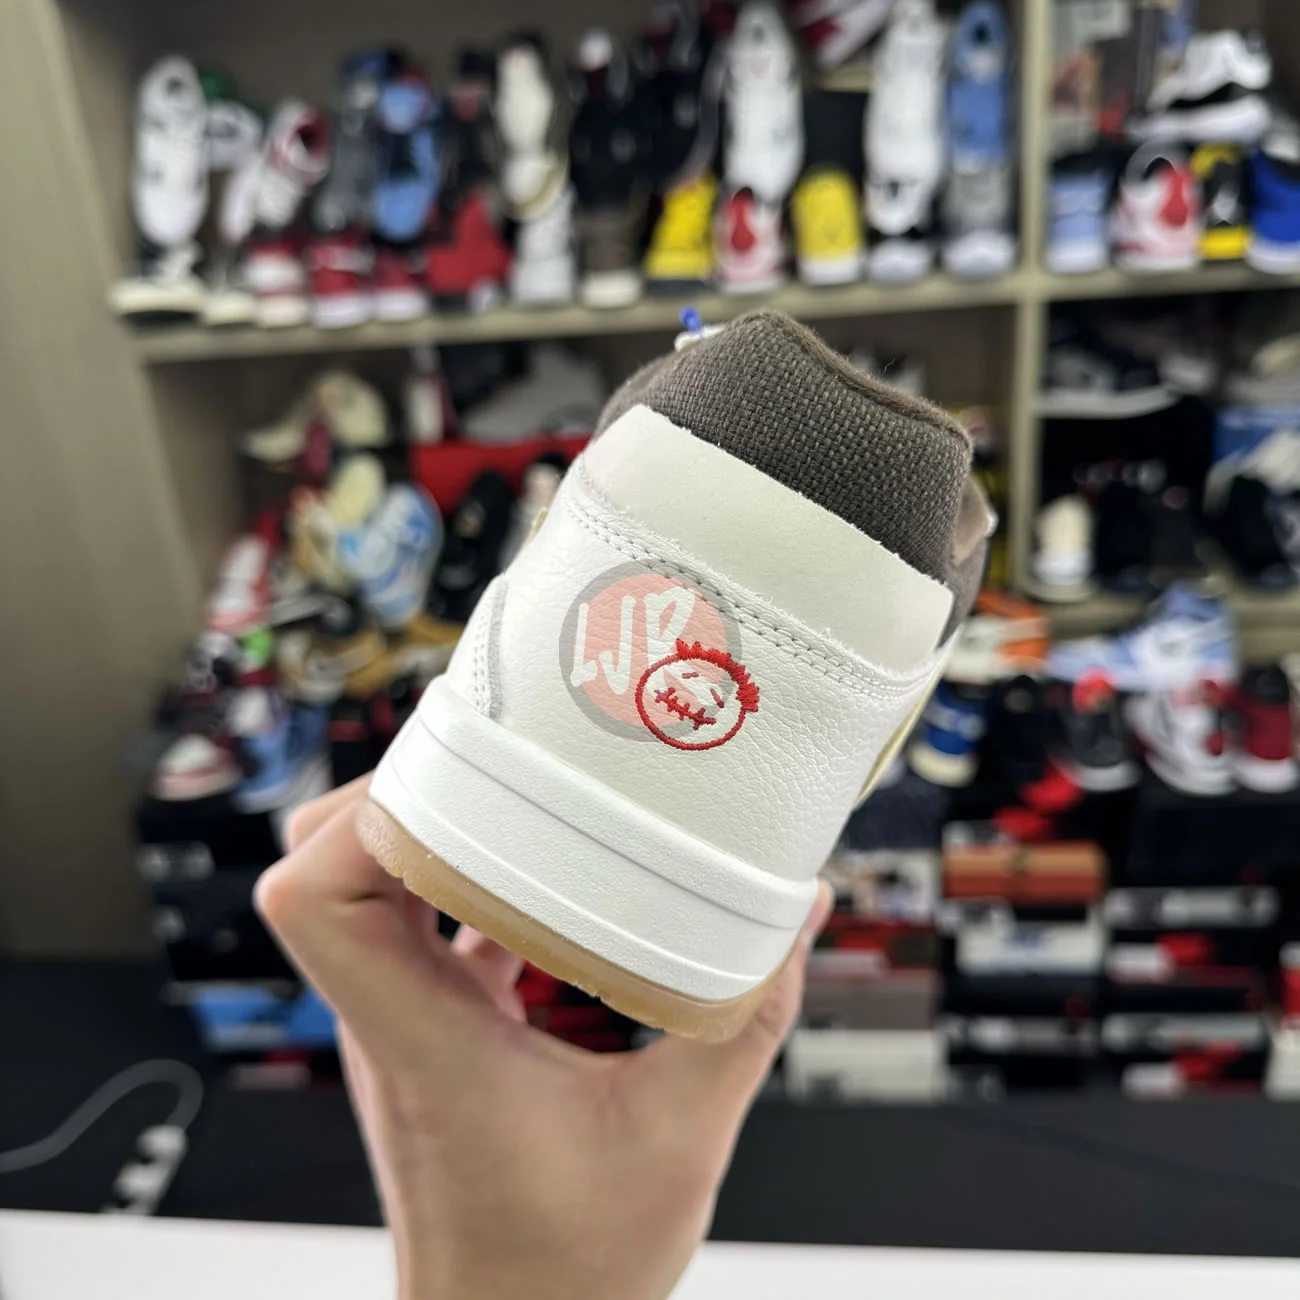 Travis Scott X Jordan Cut The Check Trainer Release Date Ljr Sneakers (10) - bc-ljr.net